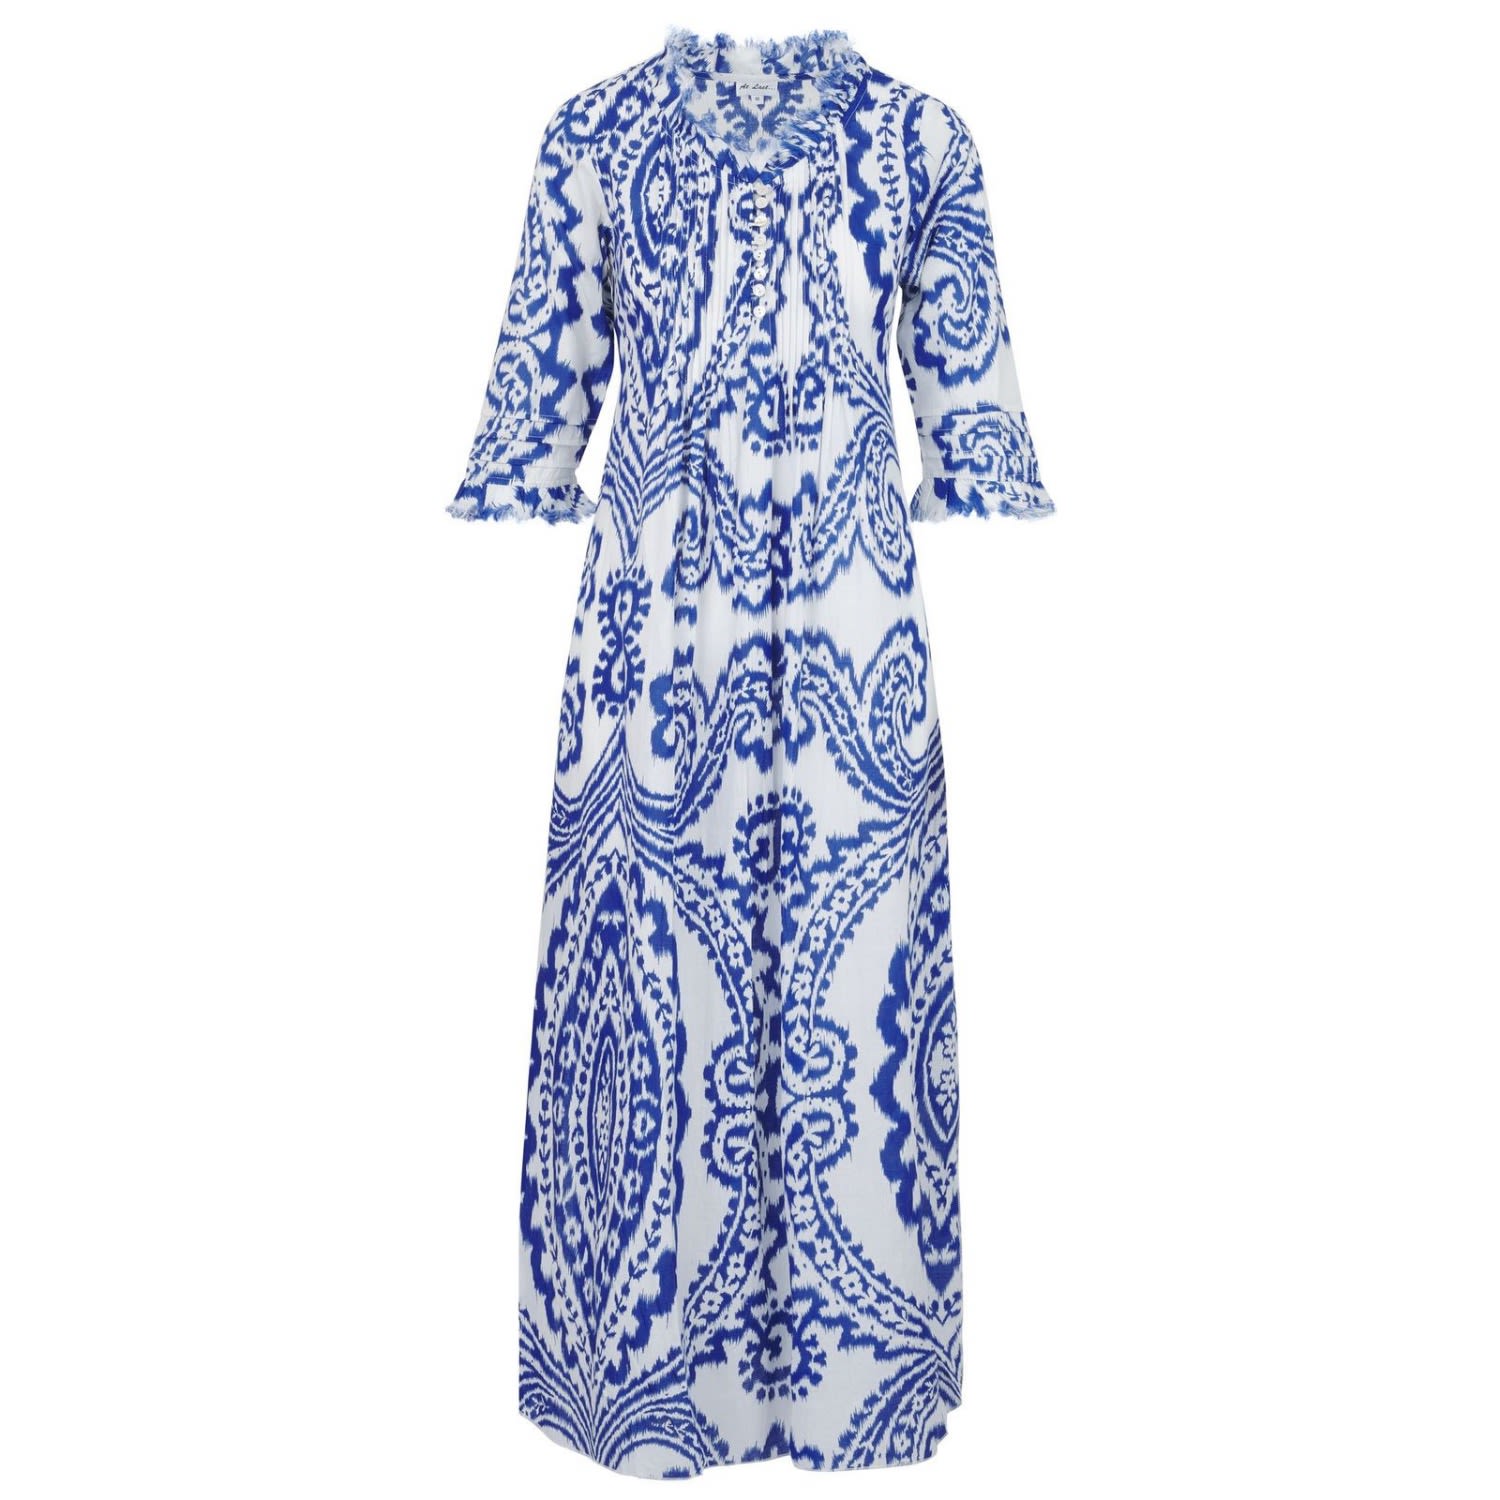 Women's Cotton Annabel Maxi Dress In Blue & White Ikat 5Xl At Last...